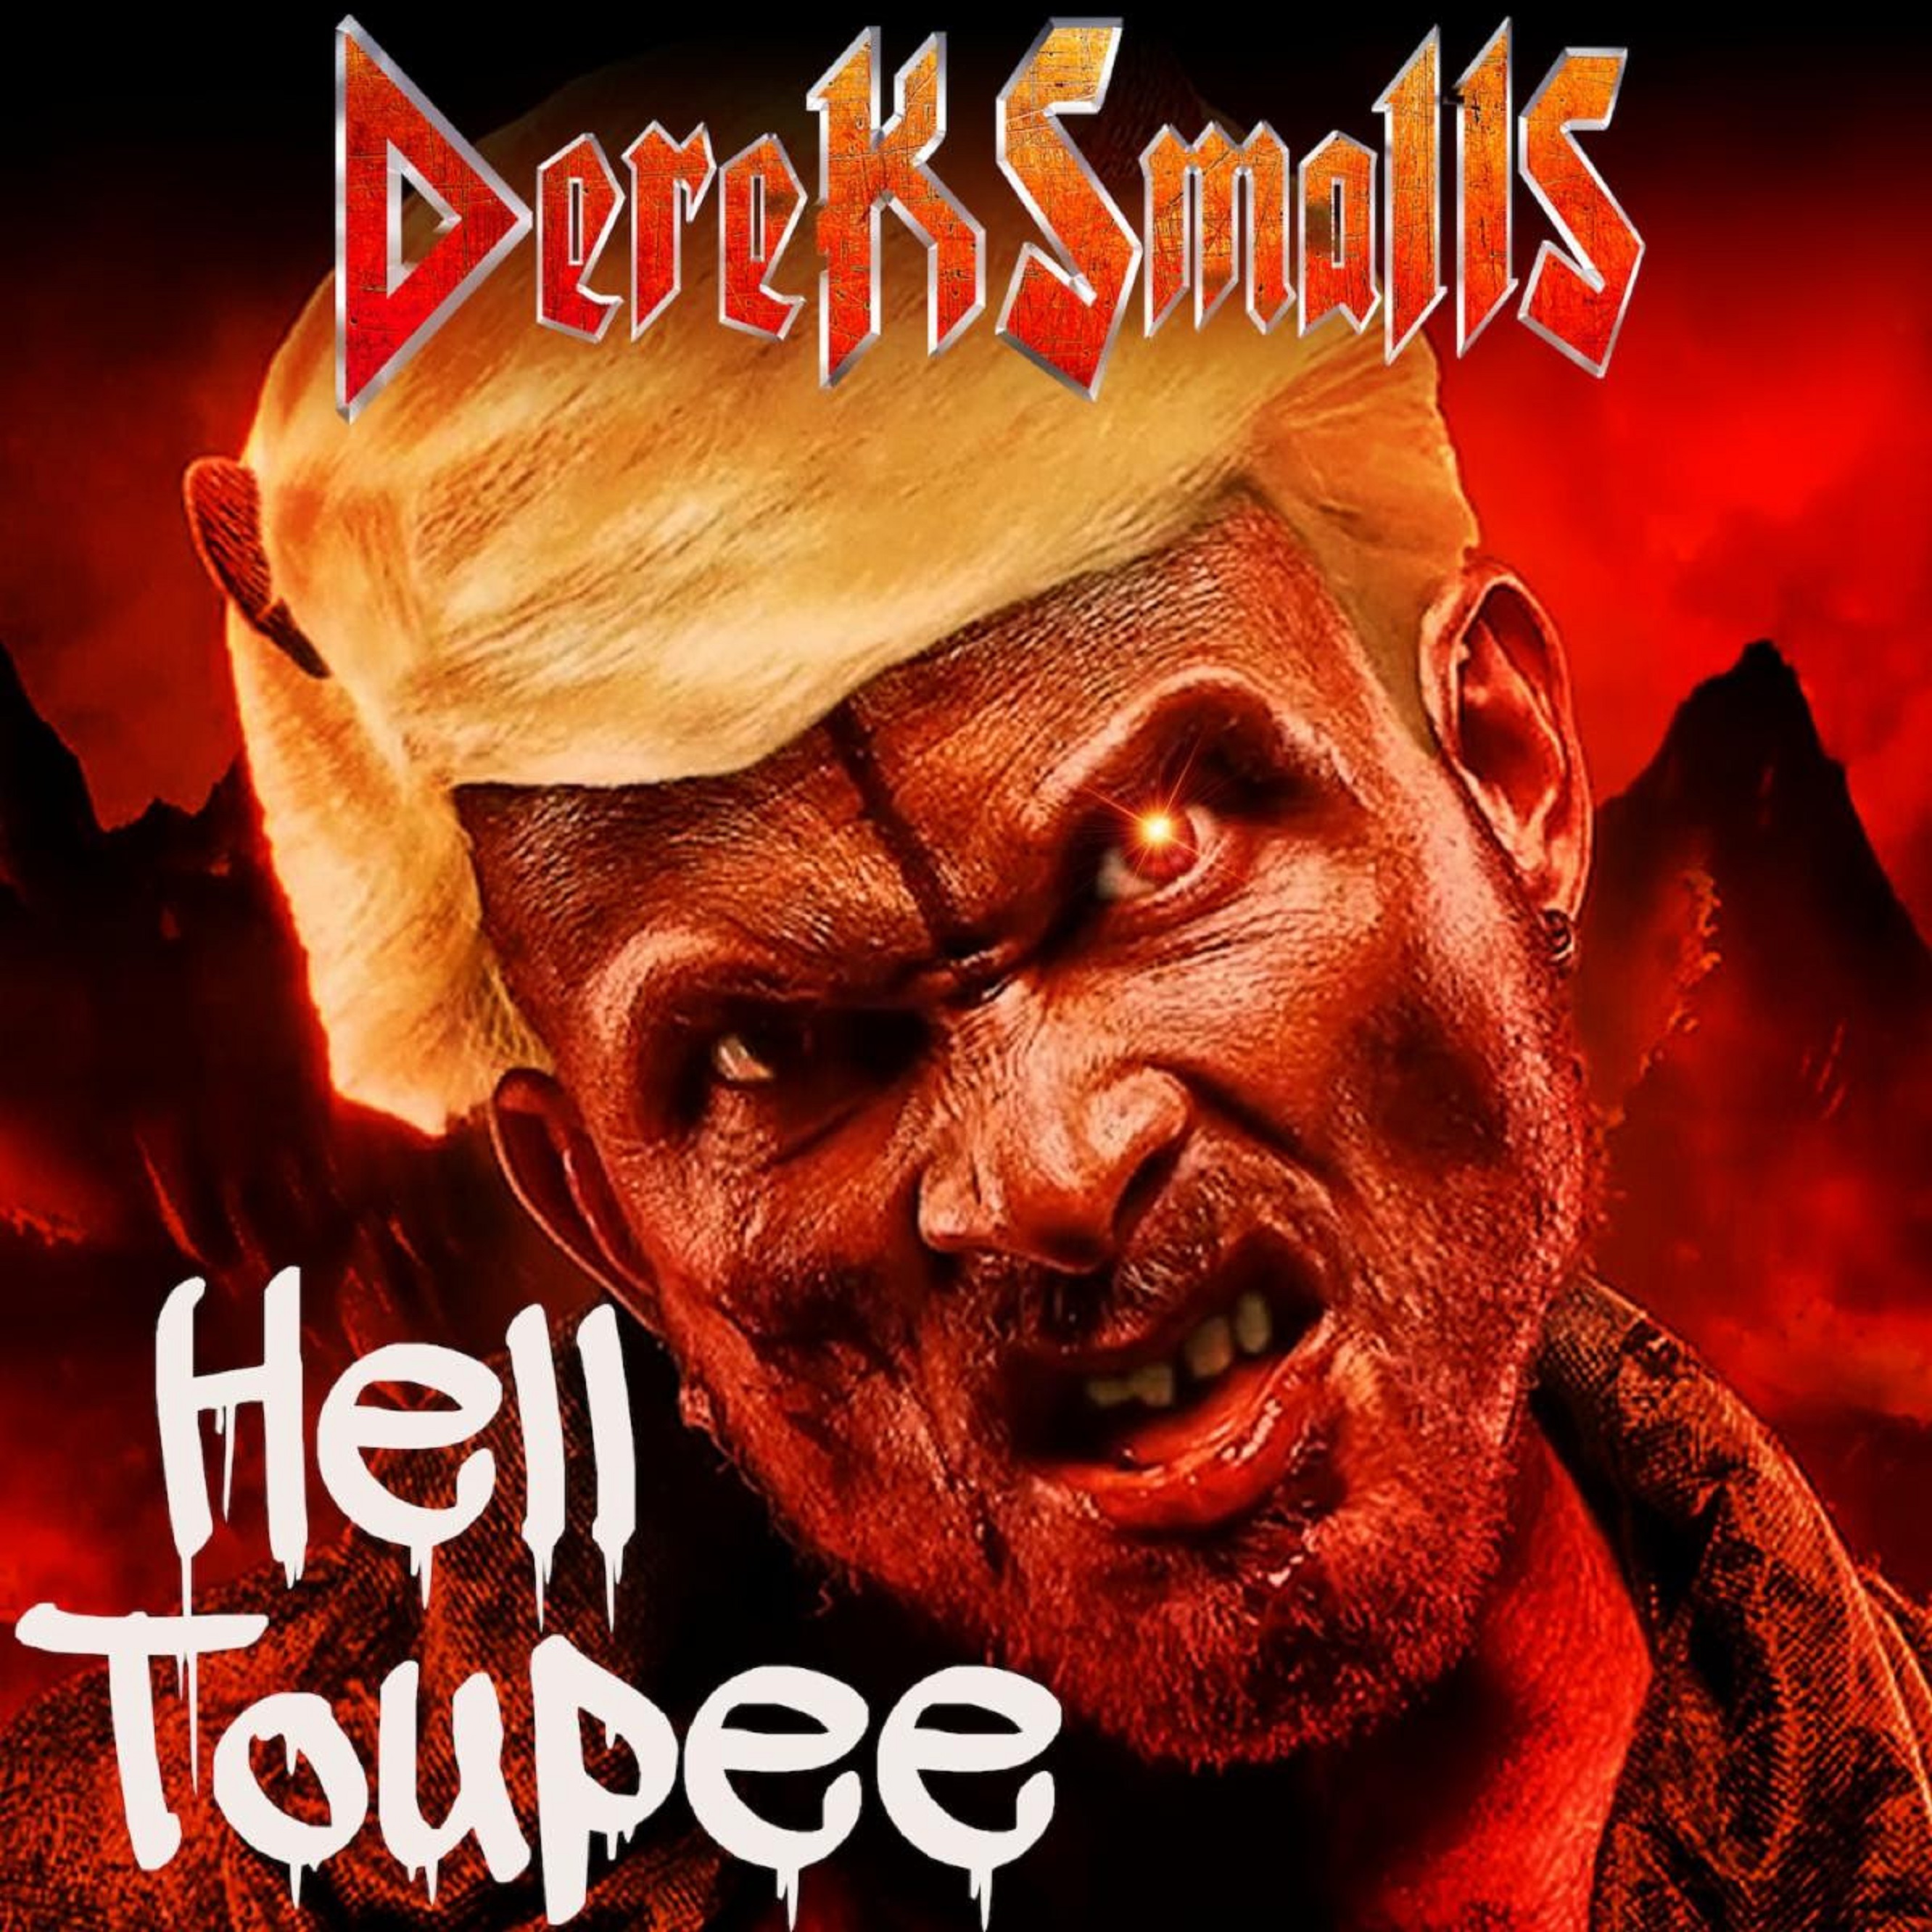 Legendary Spinal Tap Bassist Derek Smalls Shares Halloween Video to Herald New Deluxe Edition